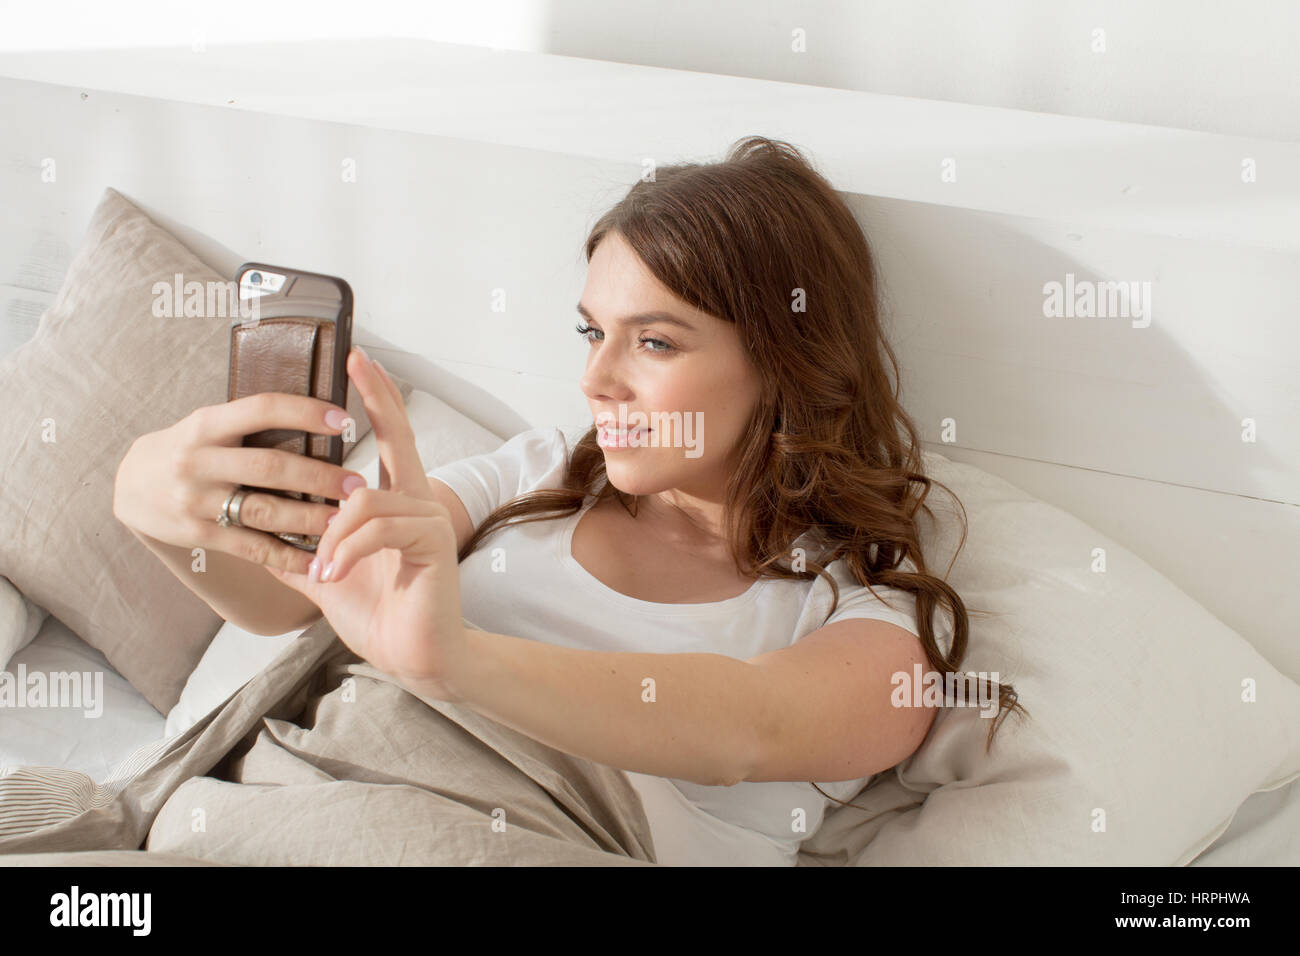 Smiling female taking selfie on her smartphone Stock Photo